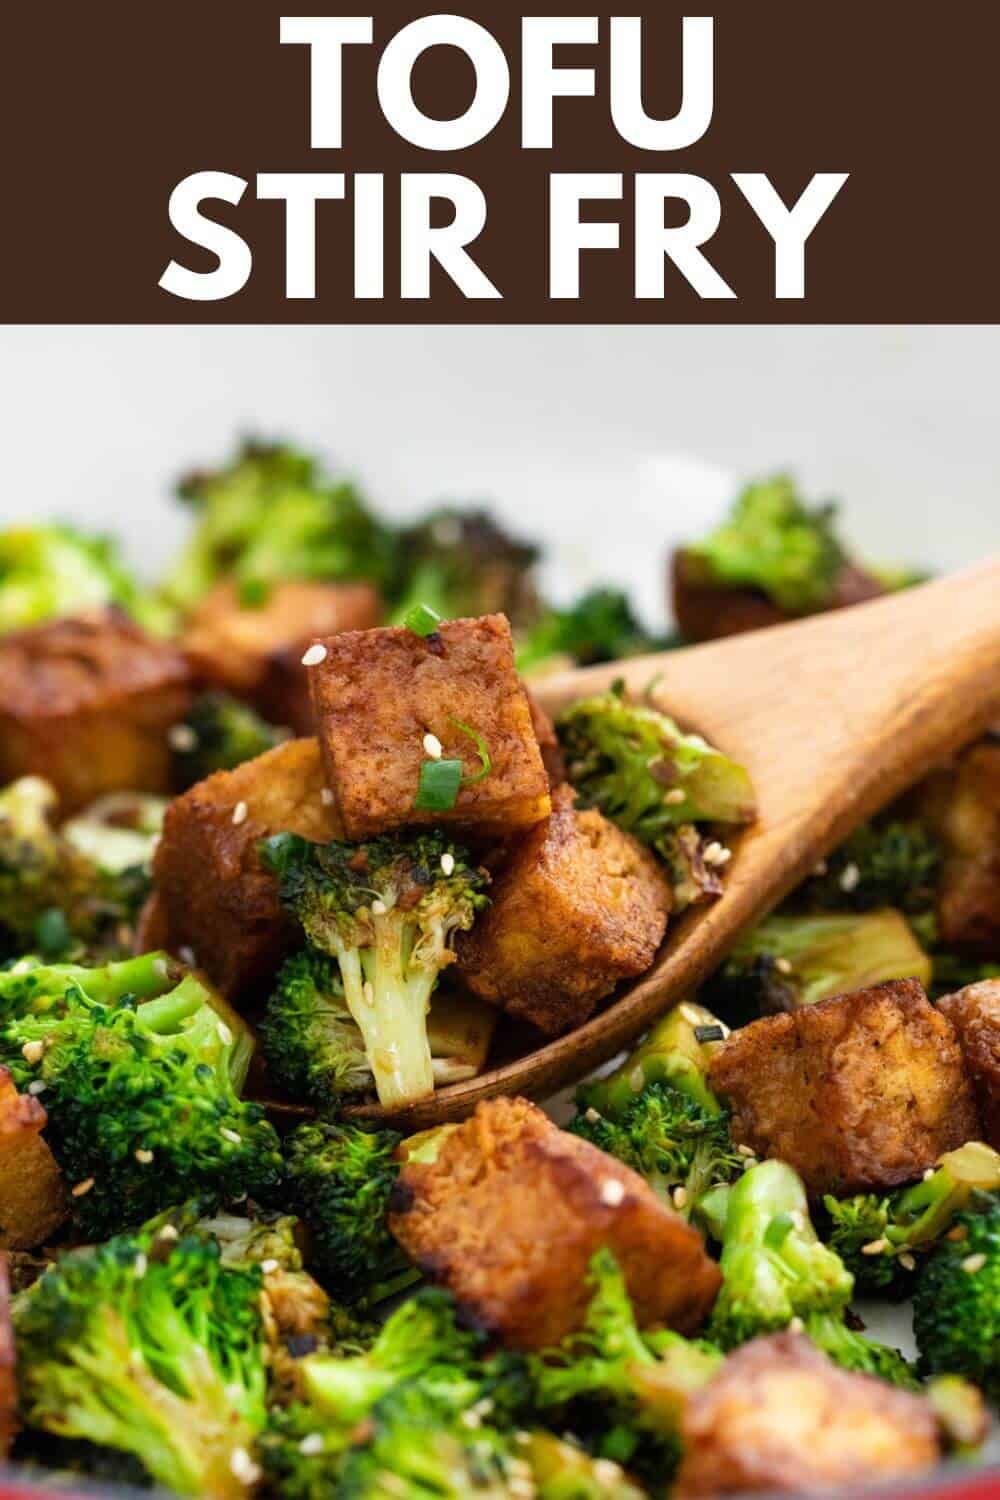 Tofu stir fry with broccoli and tofu.